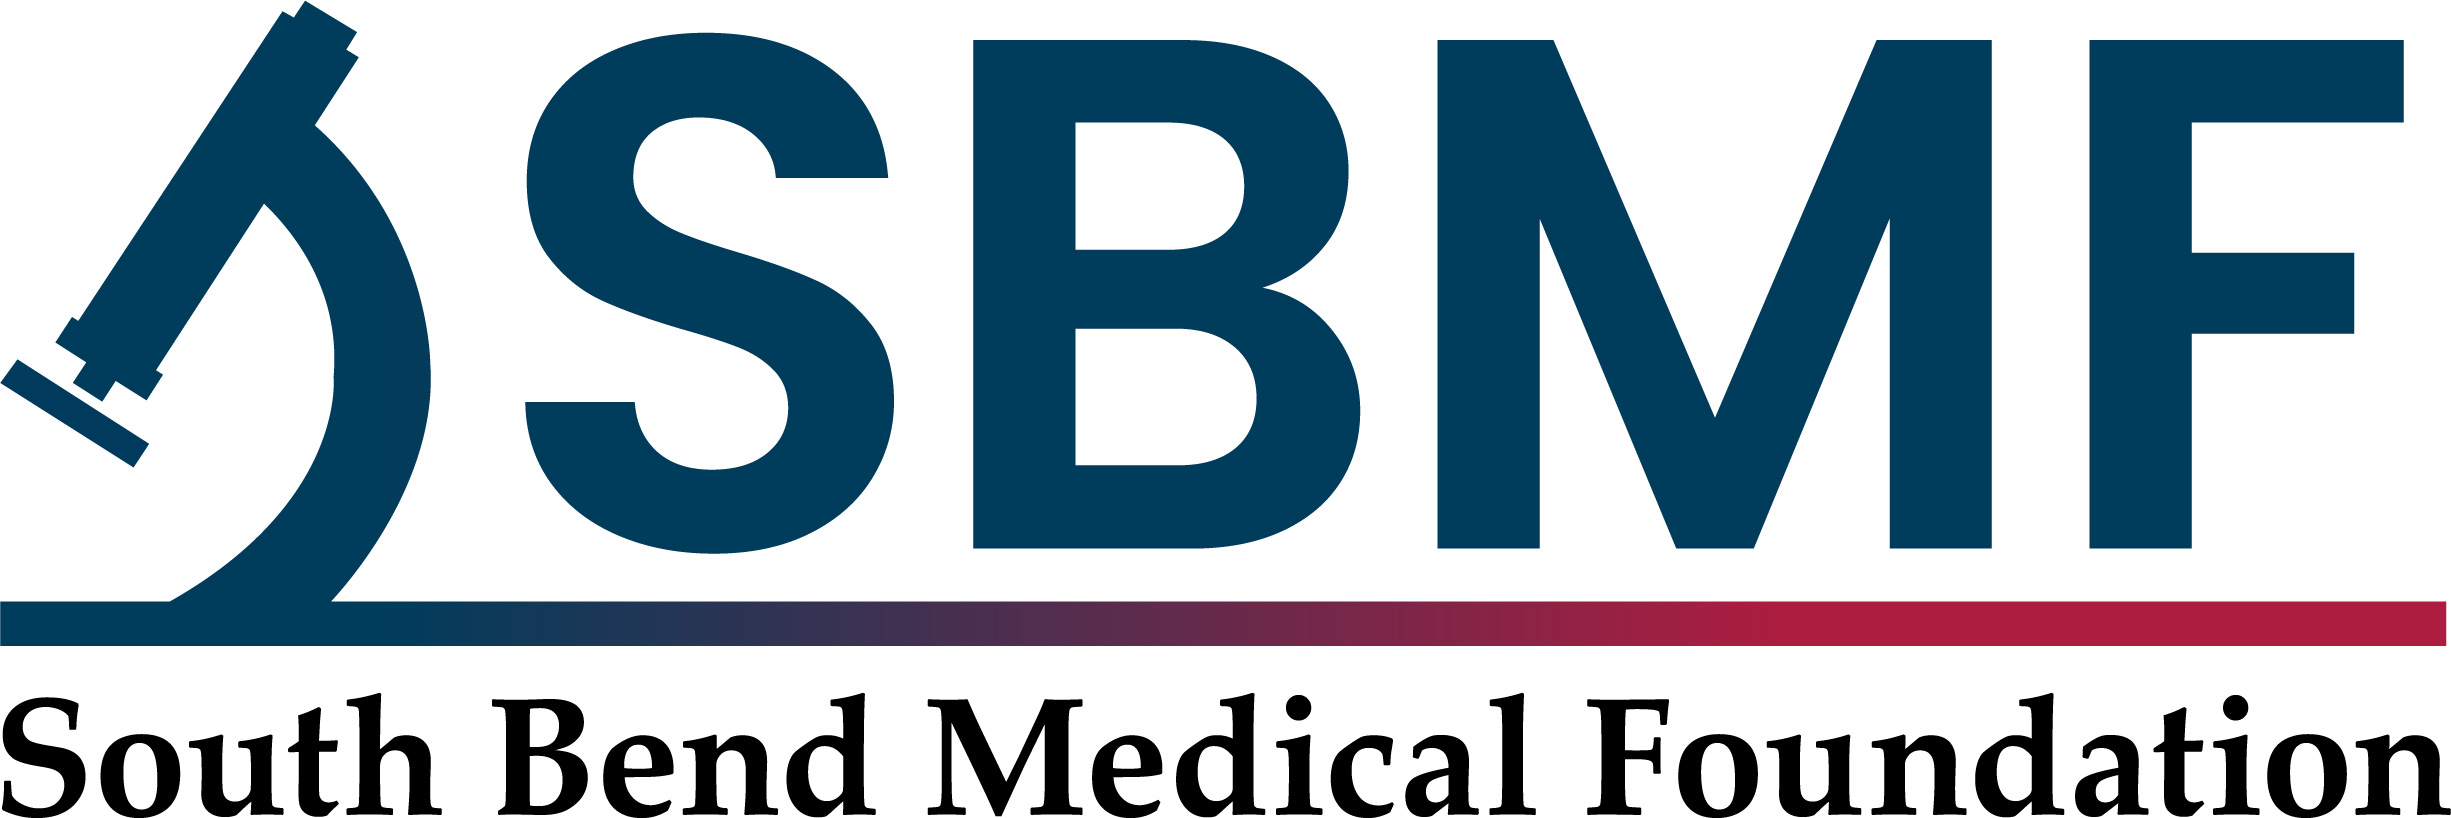 South Bend Medical Foundation, Inc.